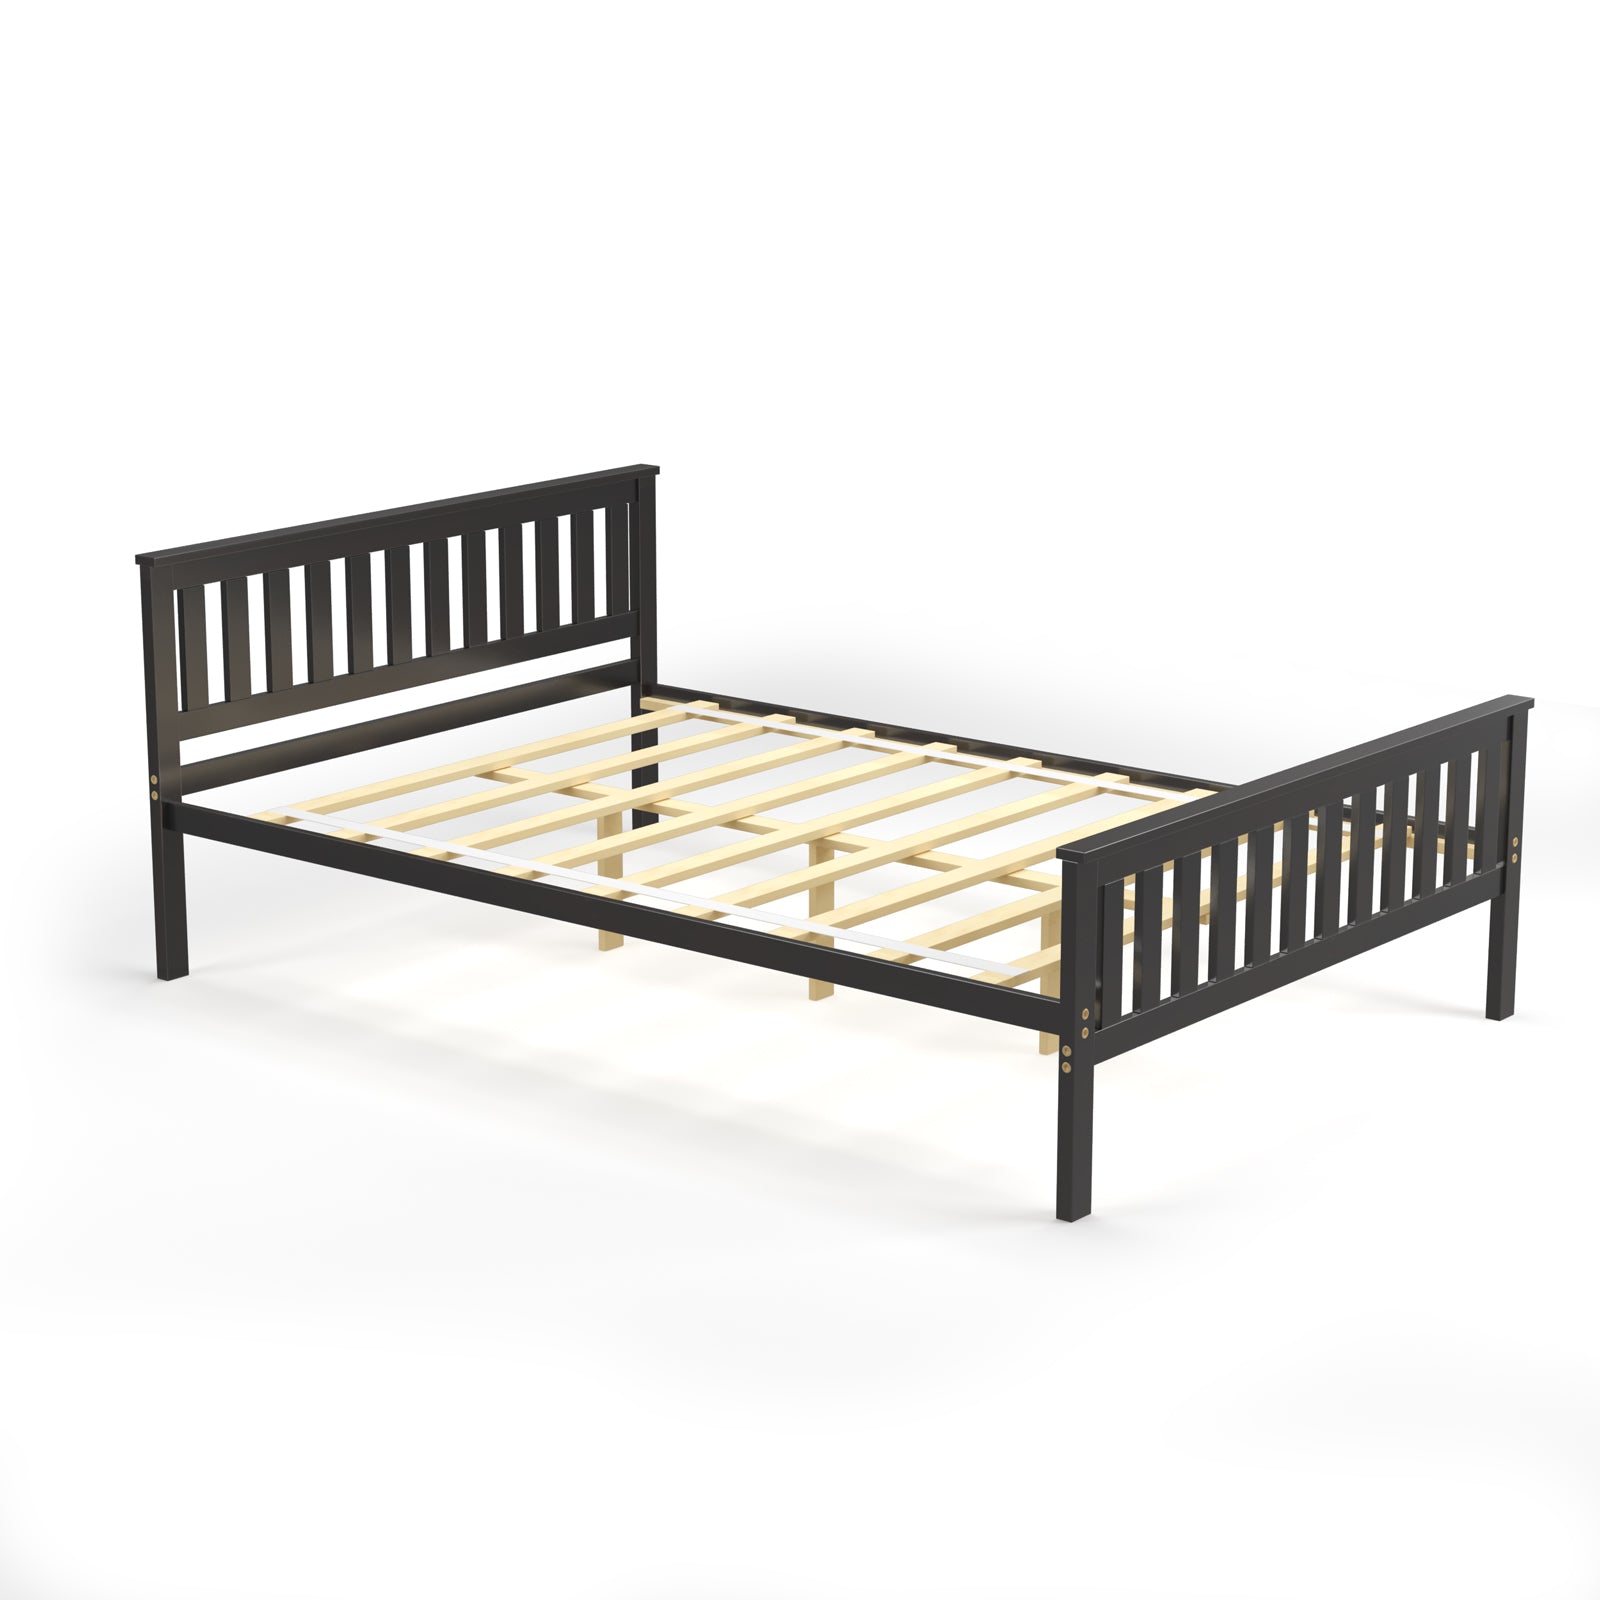 Giantex 12 Inch Sturdy Bed Base Wood Slat Support Mattress Foundation